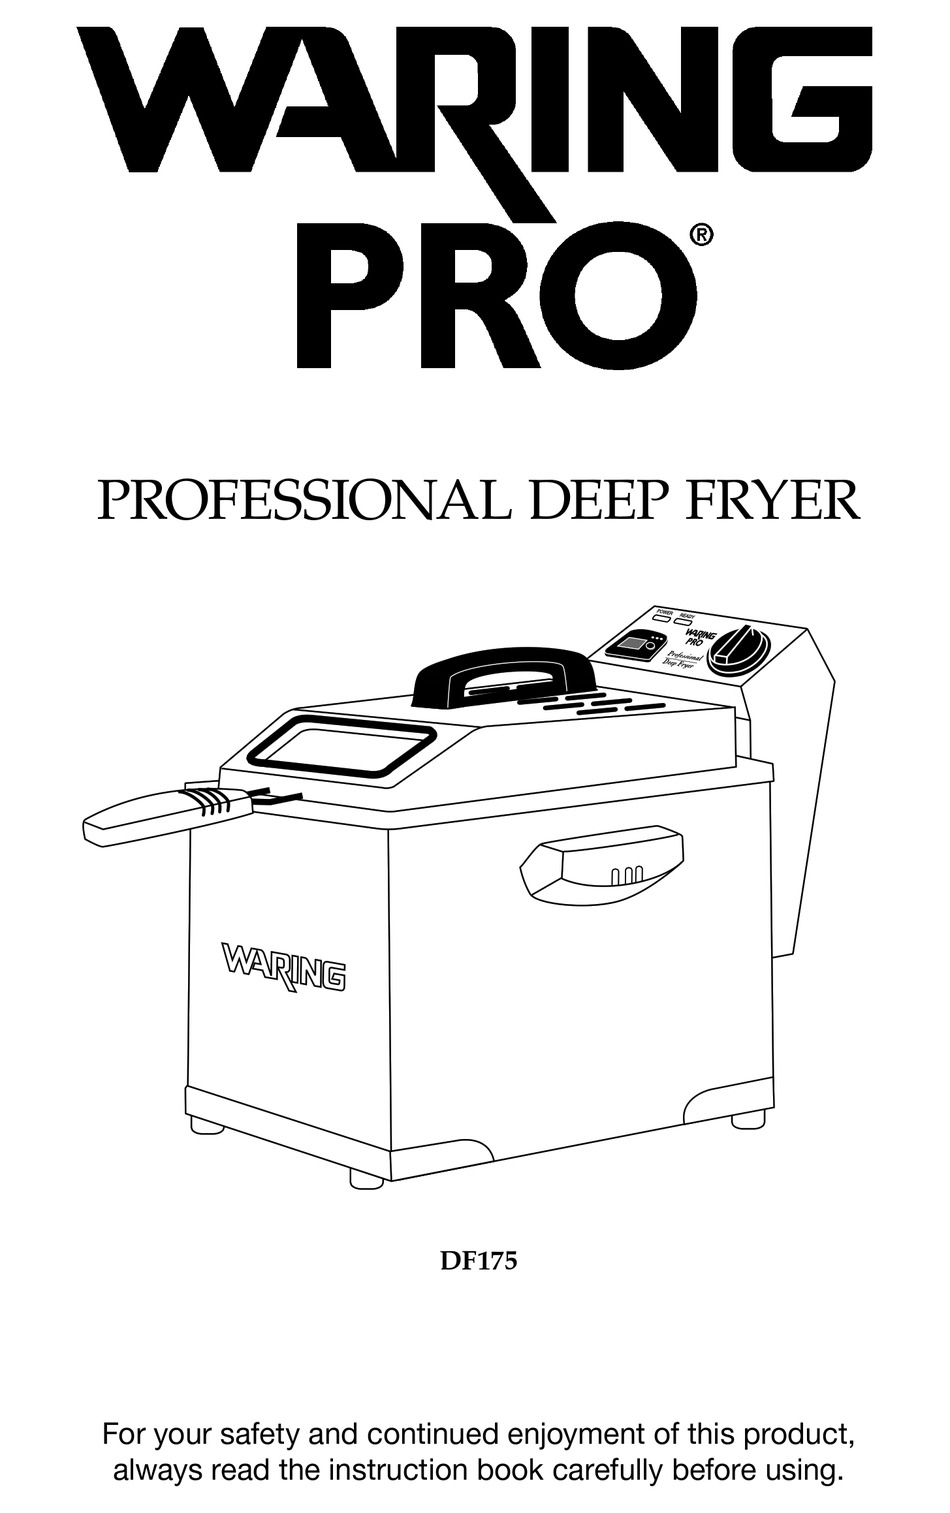 Waring Pro TF200 Professional Rotisserie Turkey Fryer/ Steamer